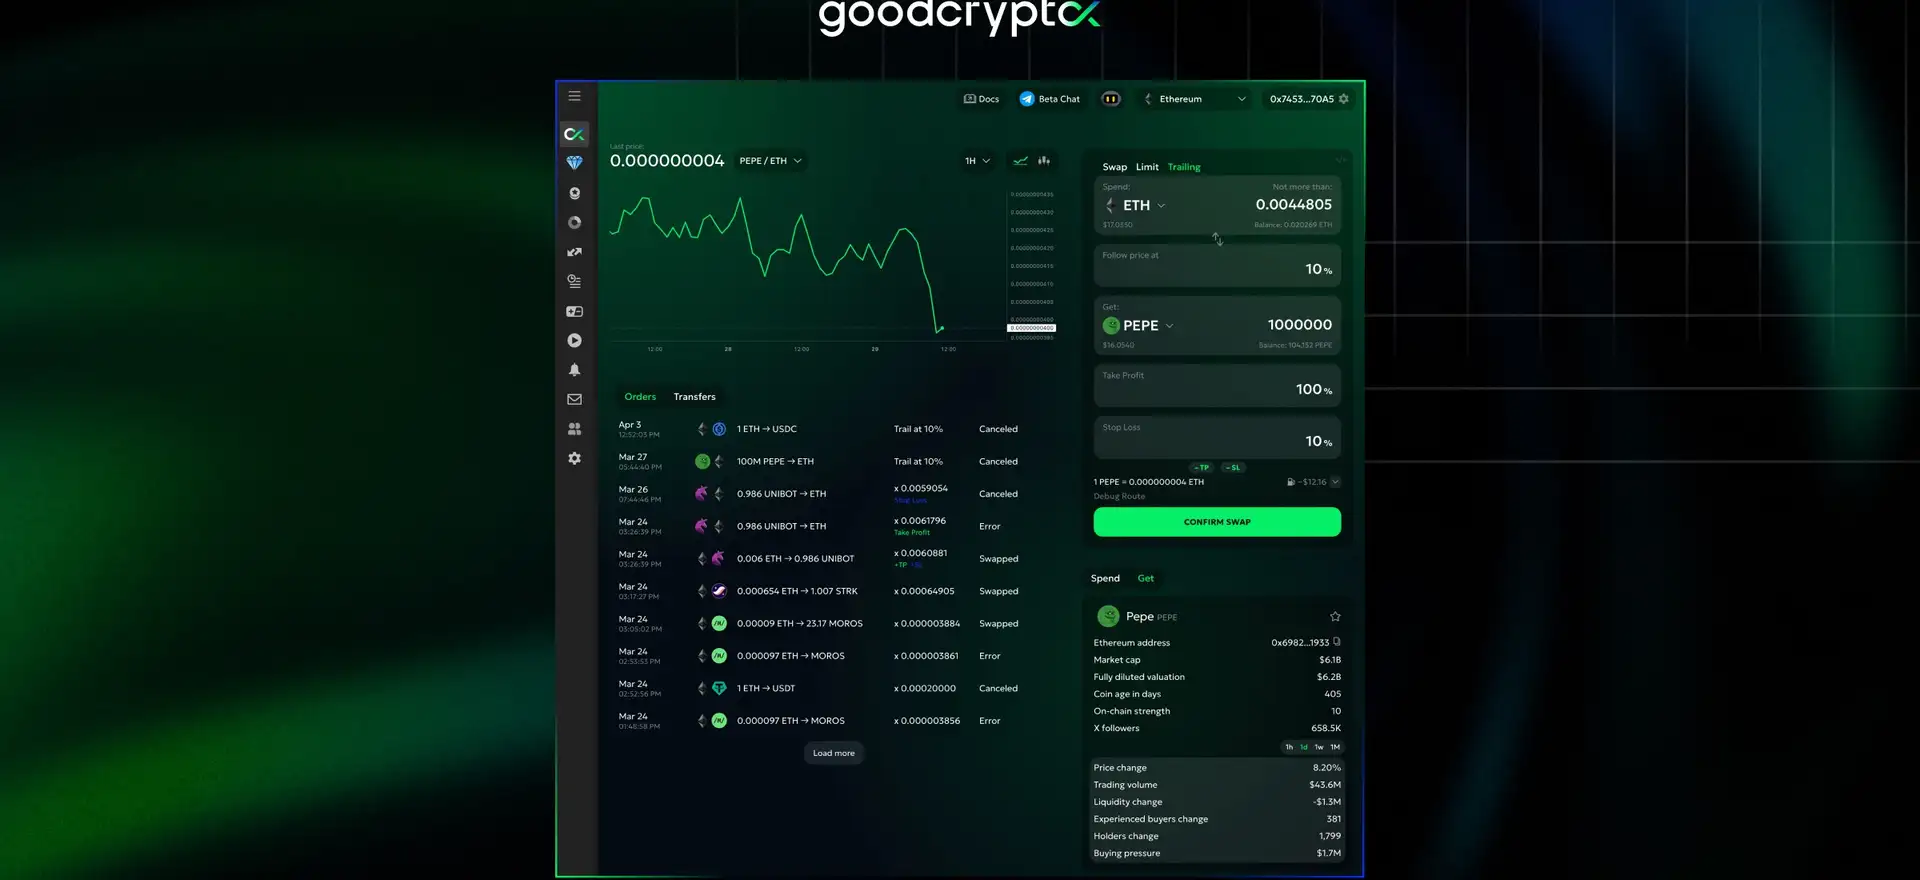 goodcryptoX Dashboard